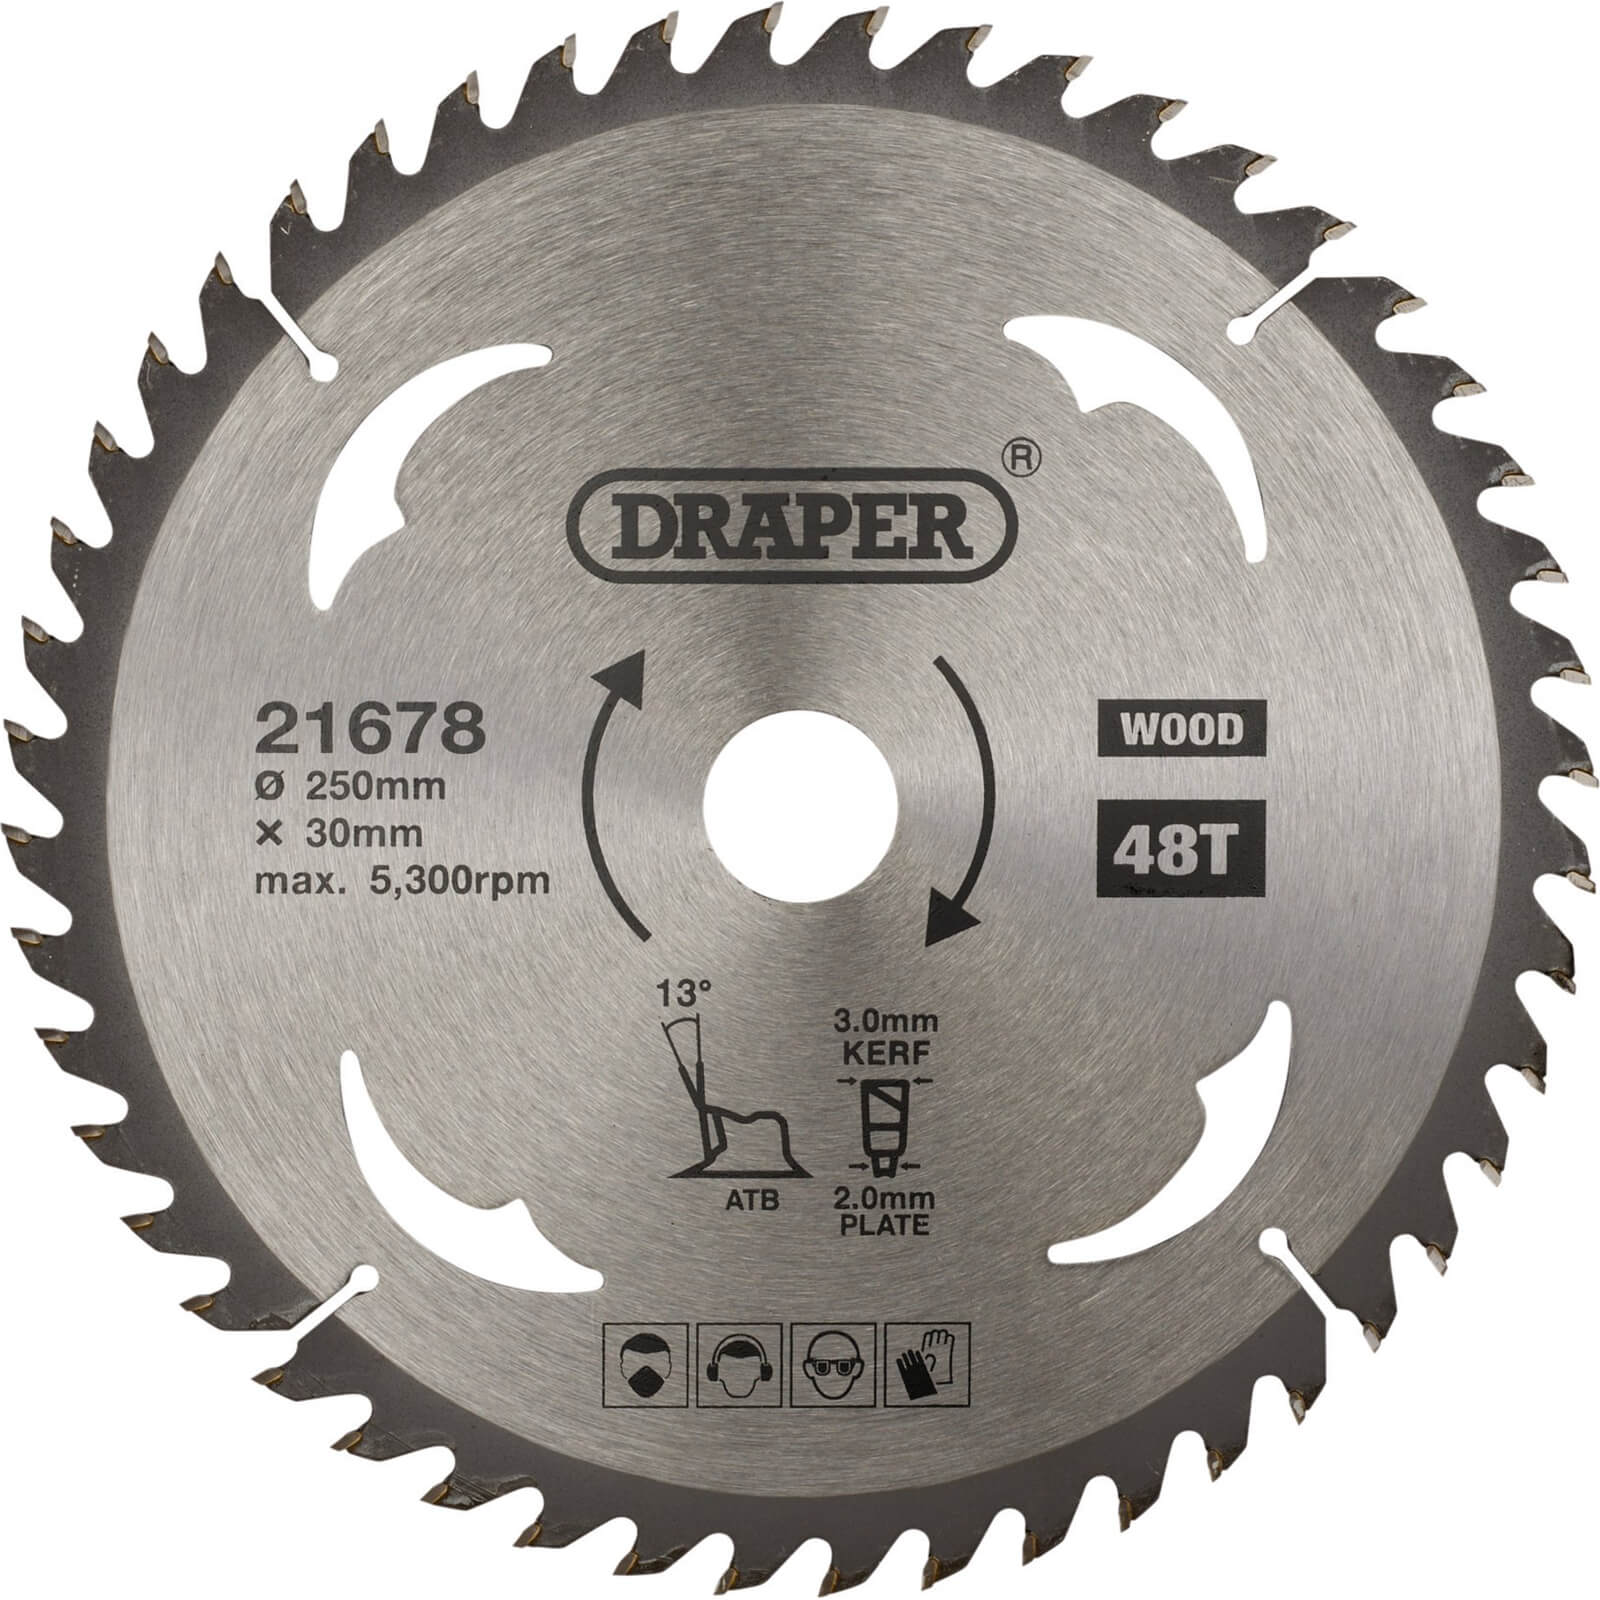 Image of Draper TCT Wood Cutting Circular Saw Blade 250mm 48T 30mm